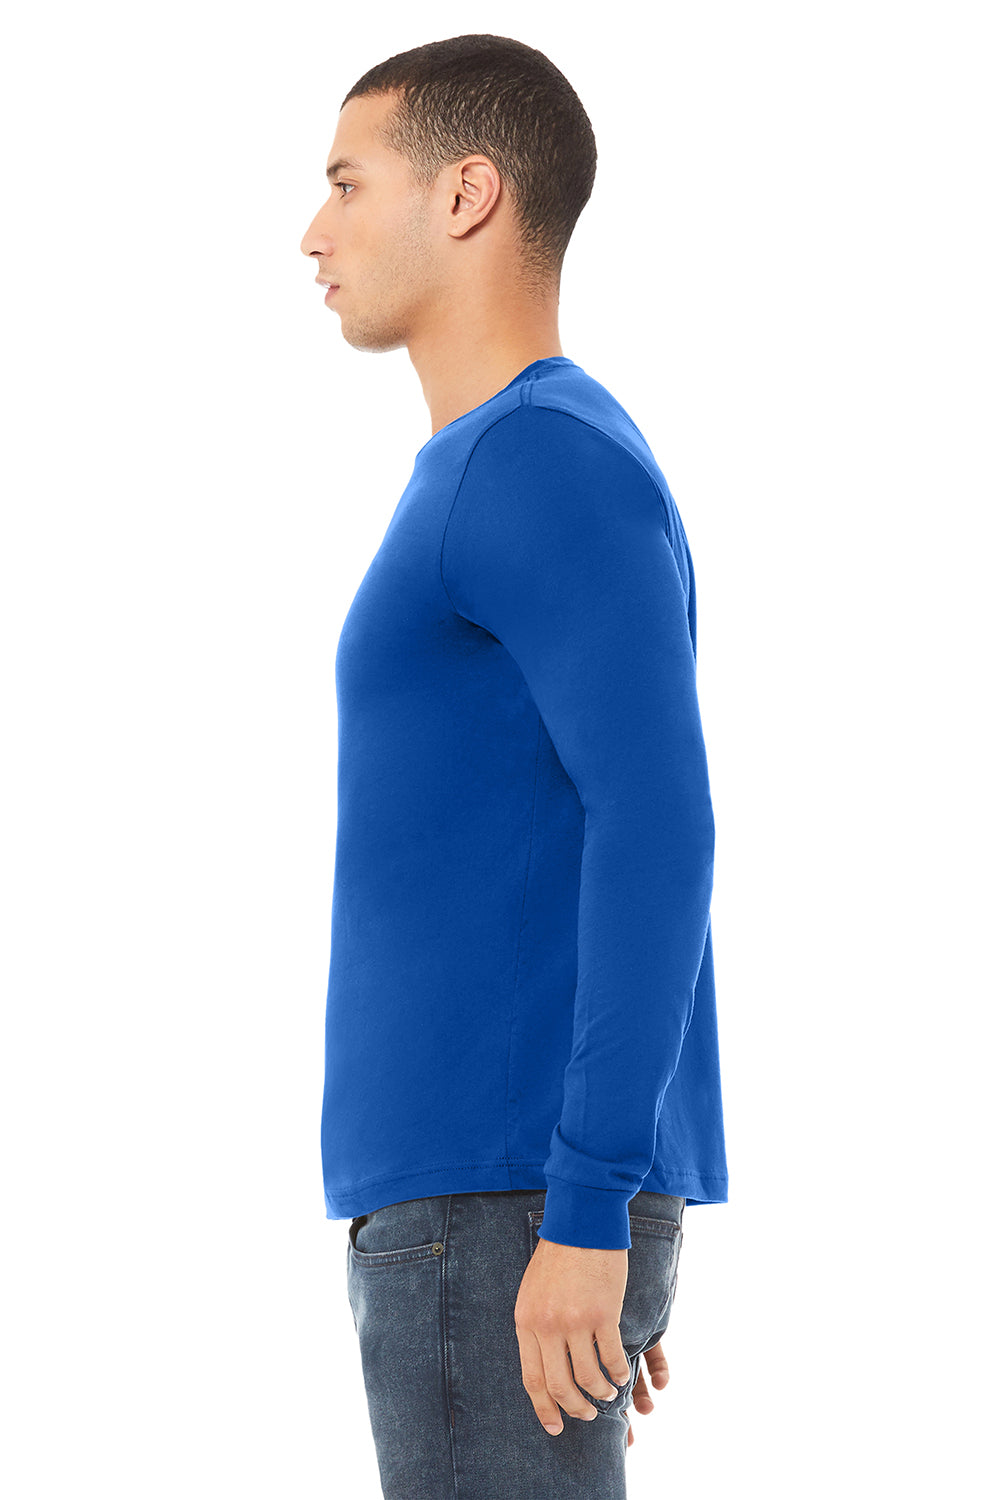 Bella + Canvas BC3501/3501 Mens Jersey Long Sleeve Crewneck T-Shirt True Royal Blue Model Side